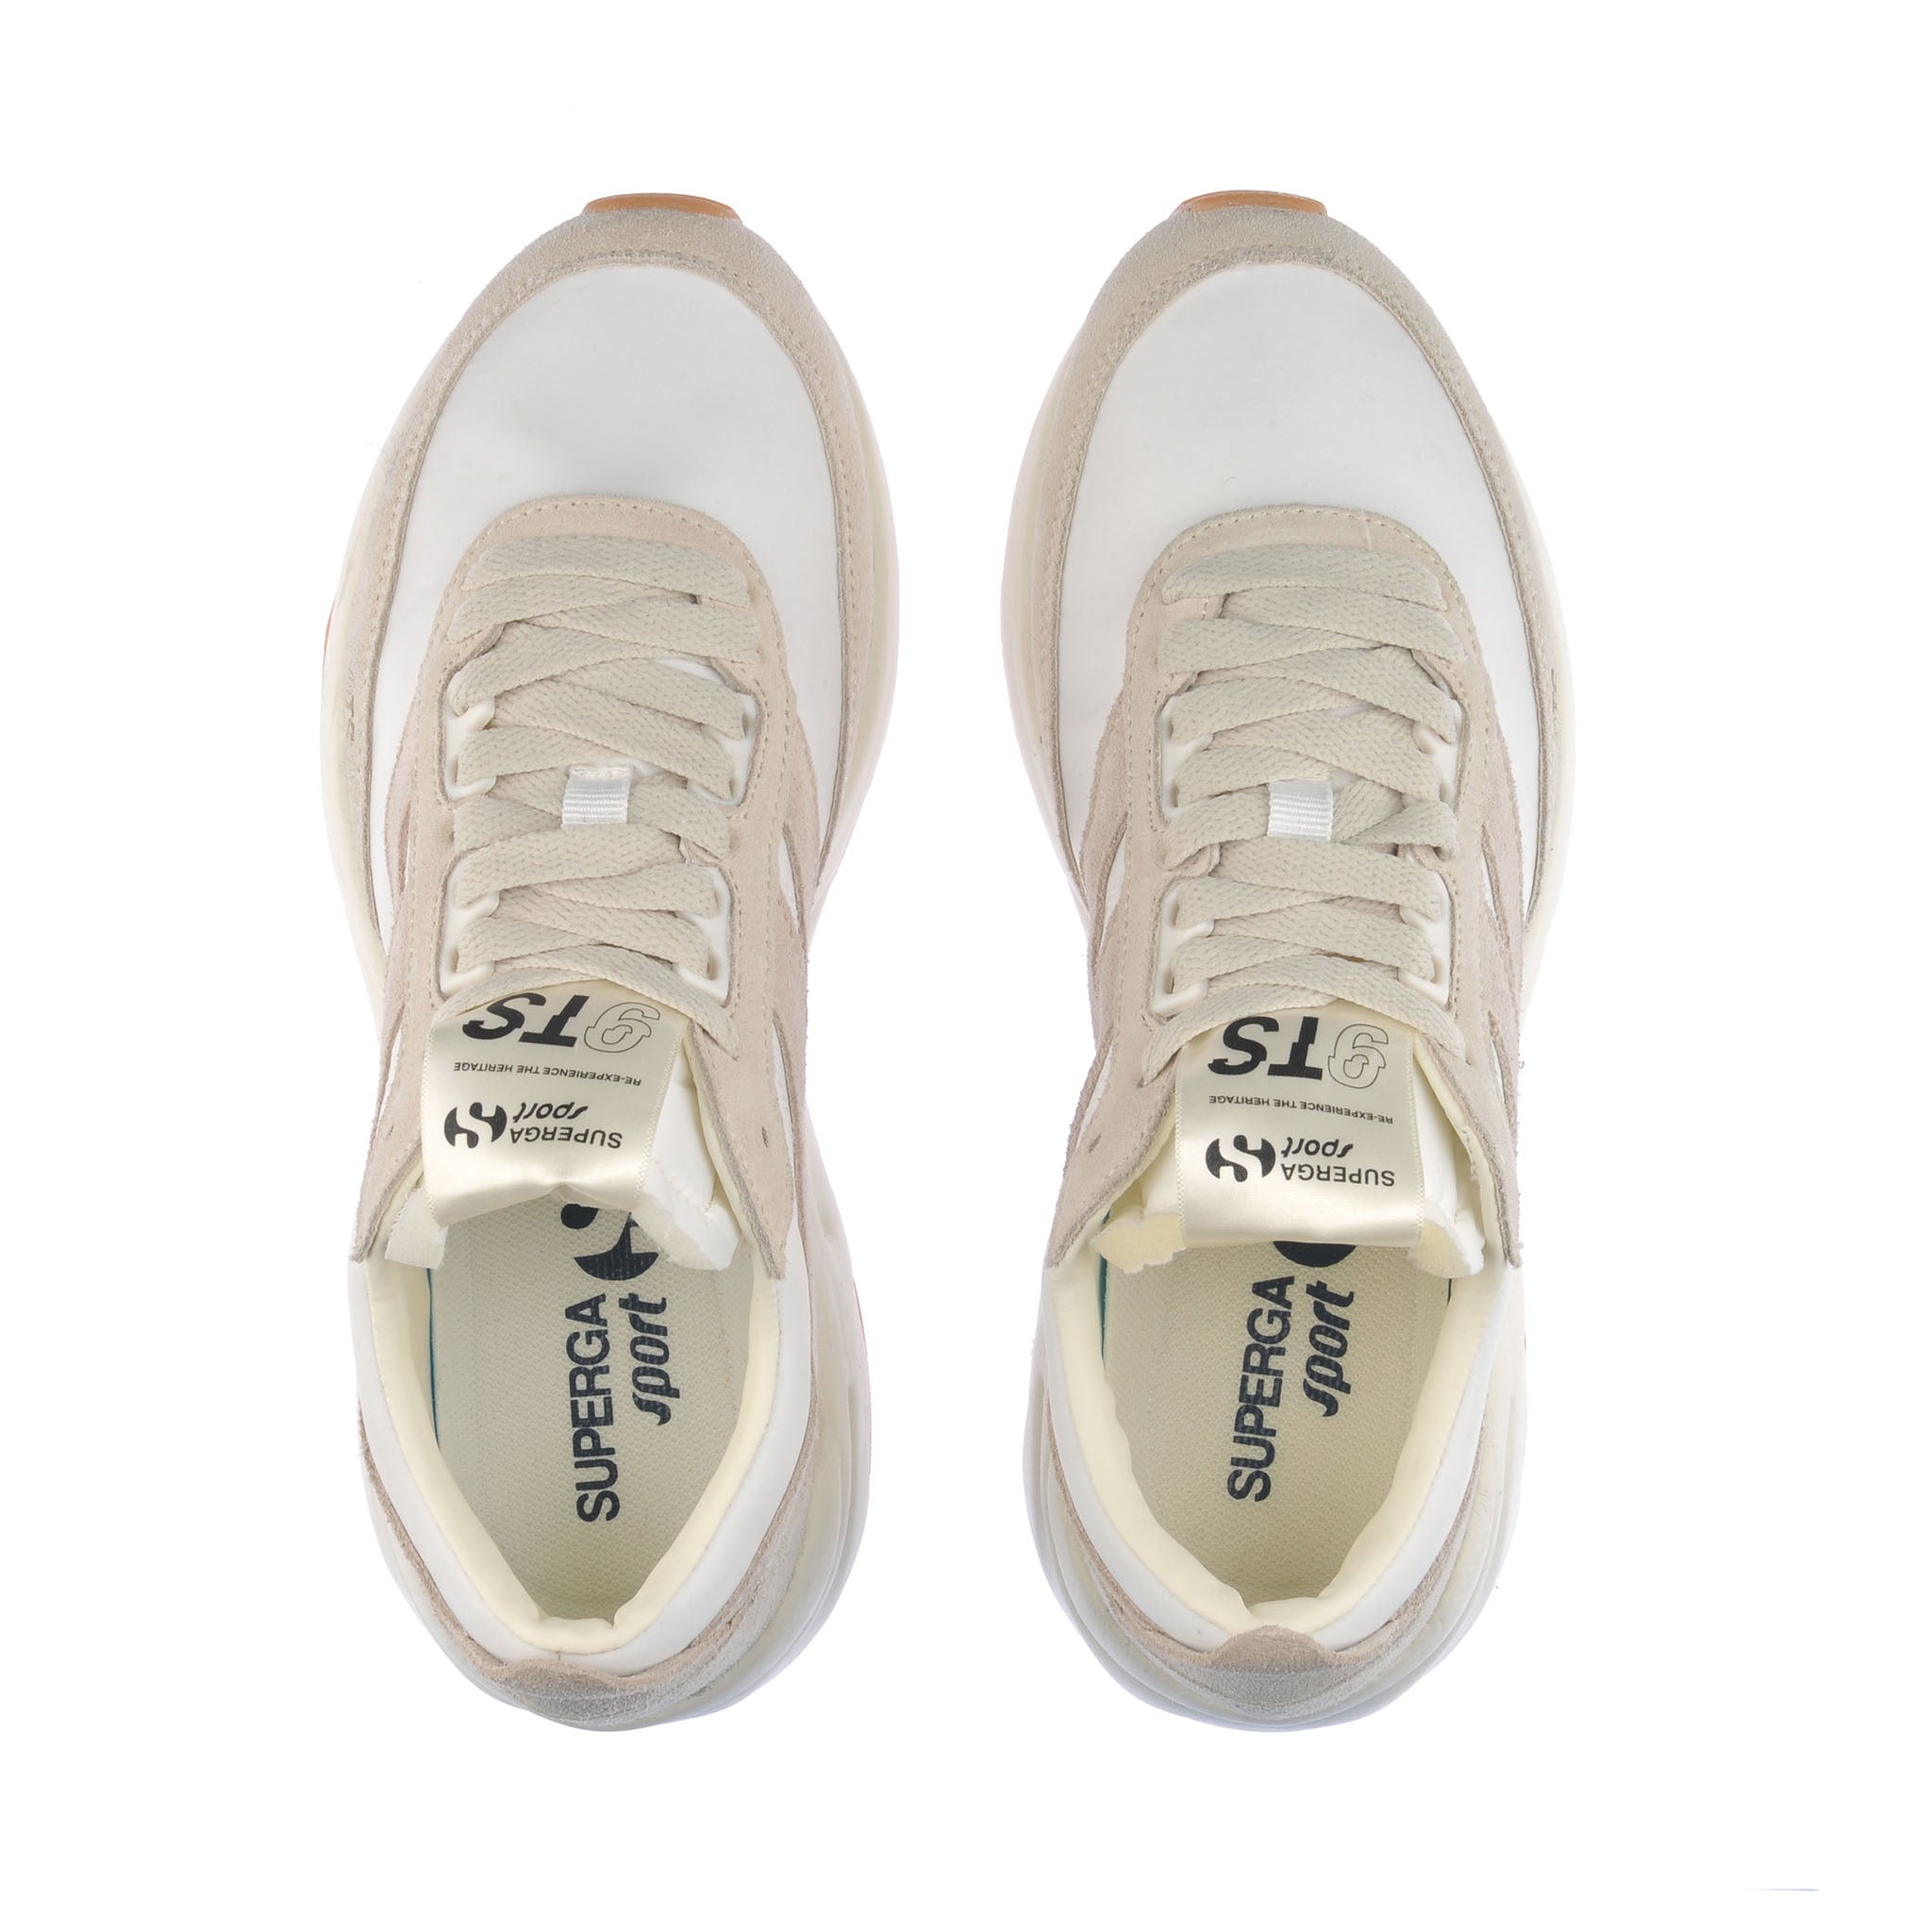 4089 Training 9Ts Slim Suede Sneakers - White Avorio Beige Lt Gum